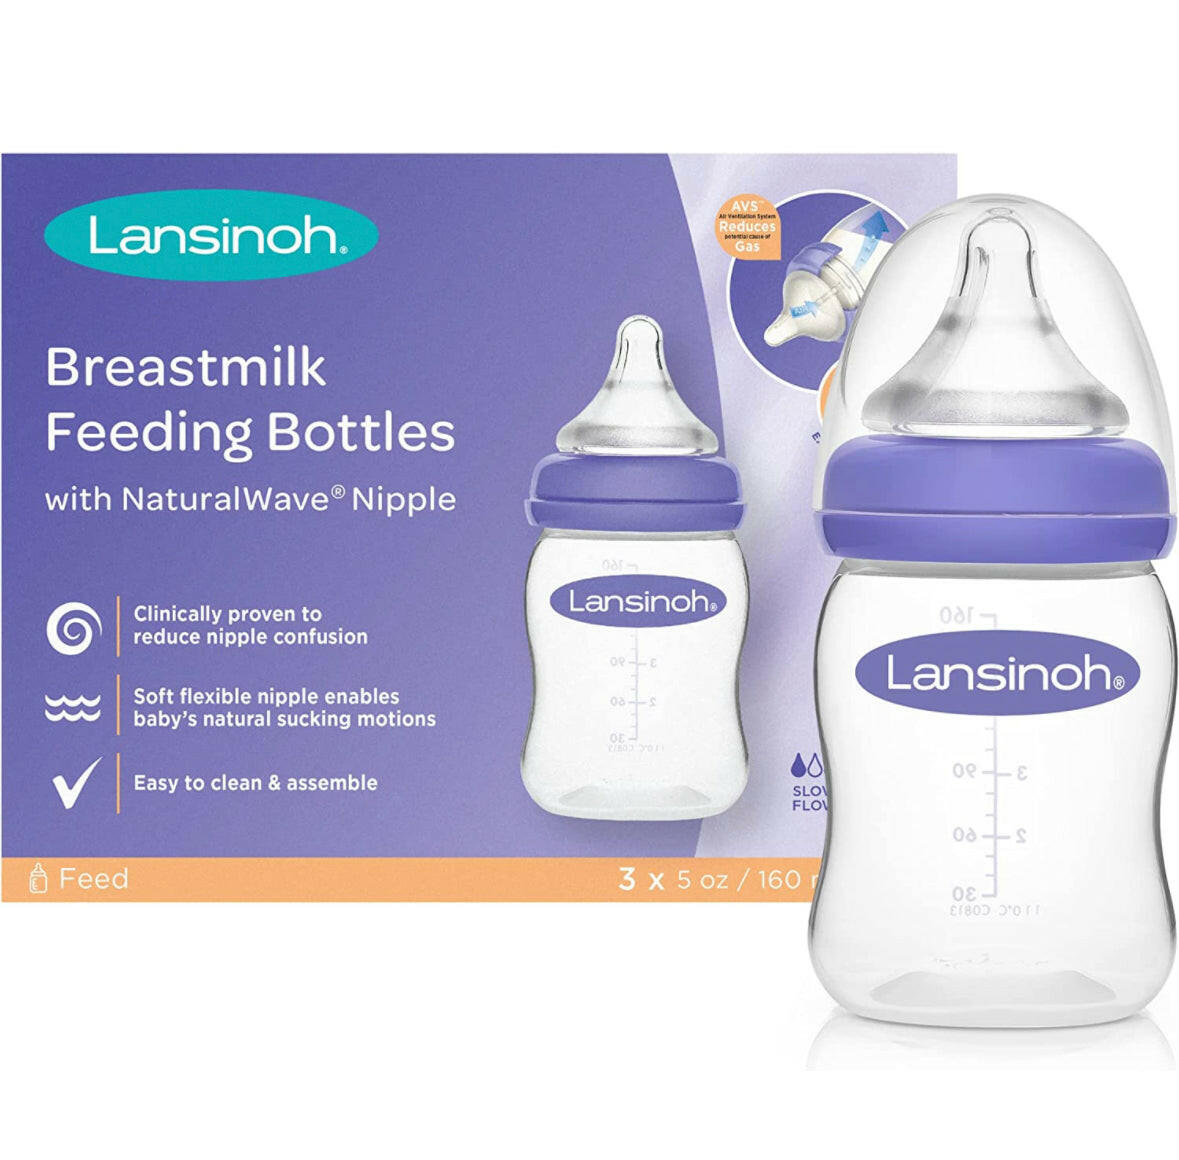 Lansinoh Baby Bottles for Breastfeeding Babies, 5 Ounces.